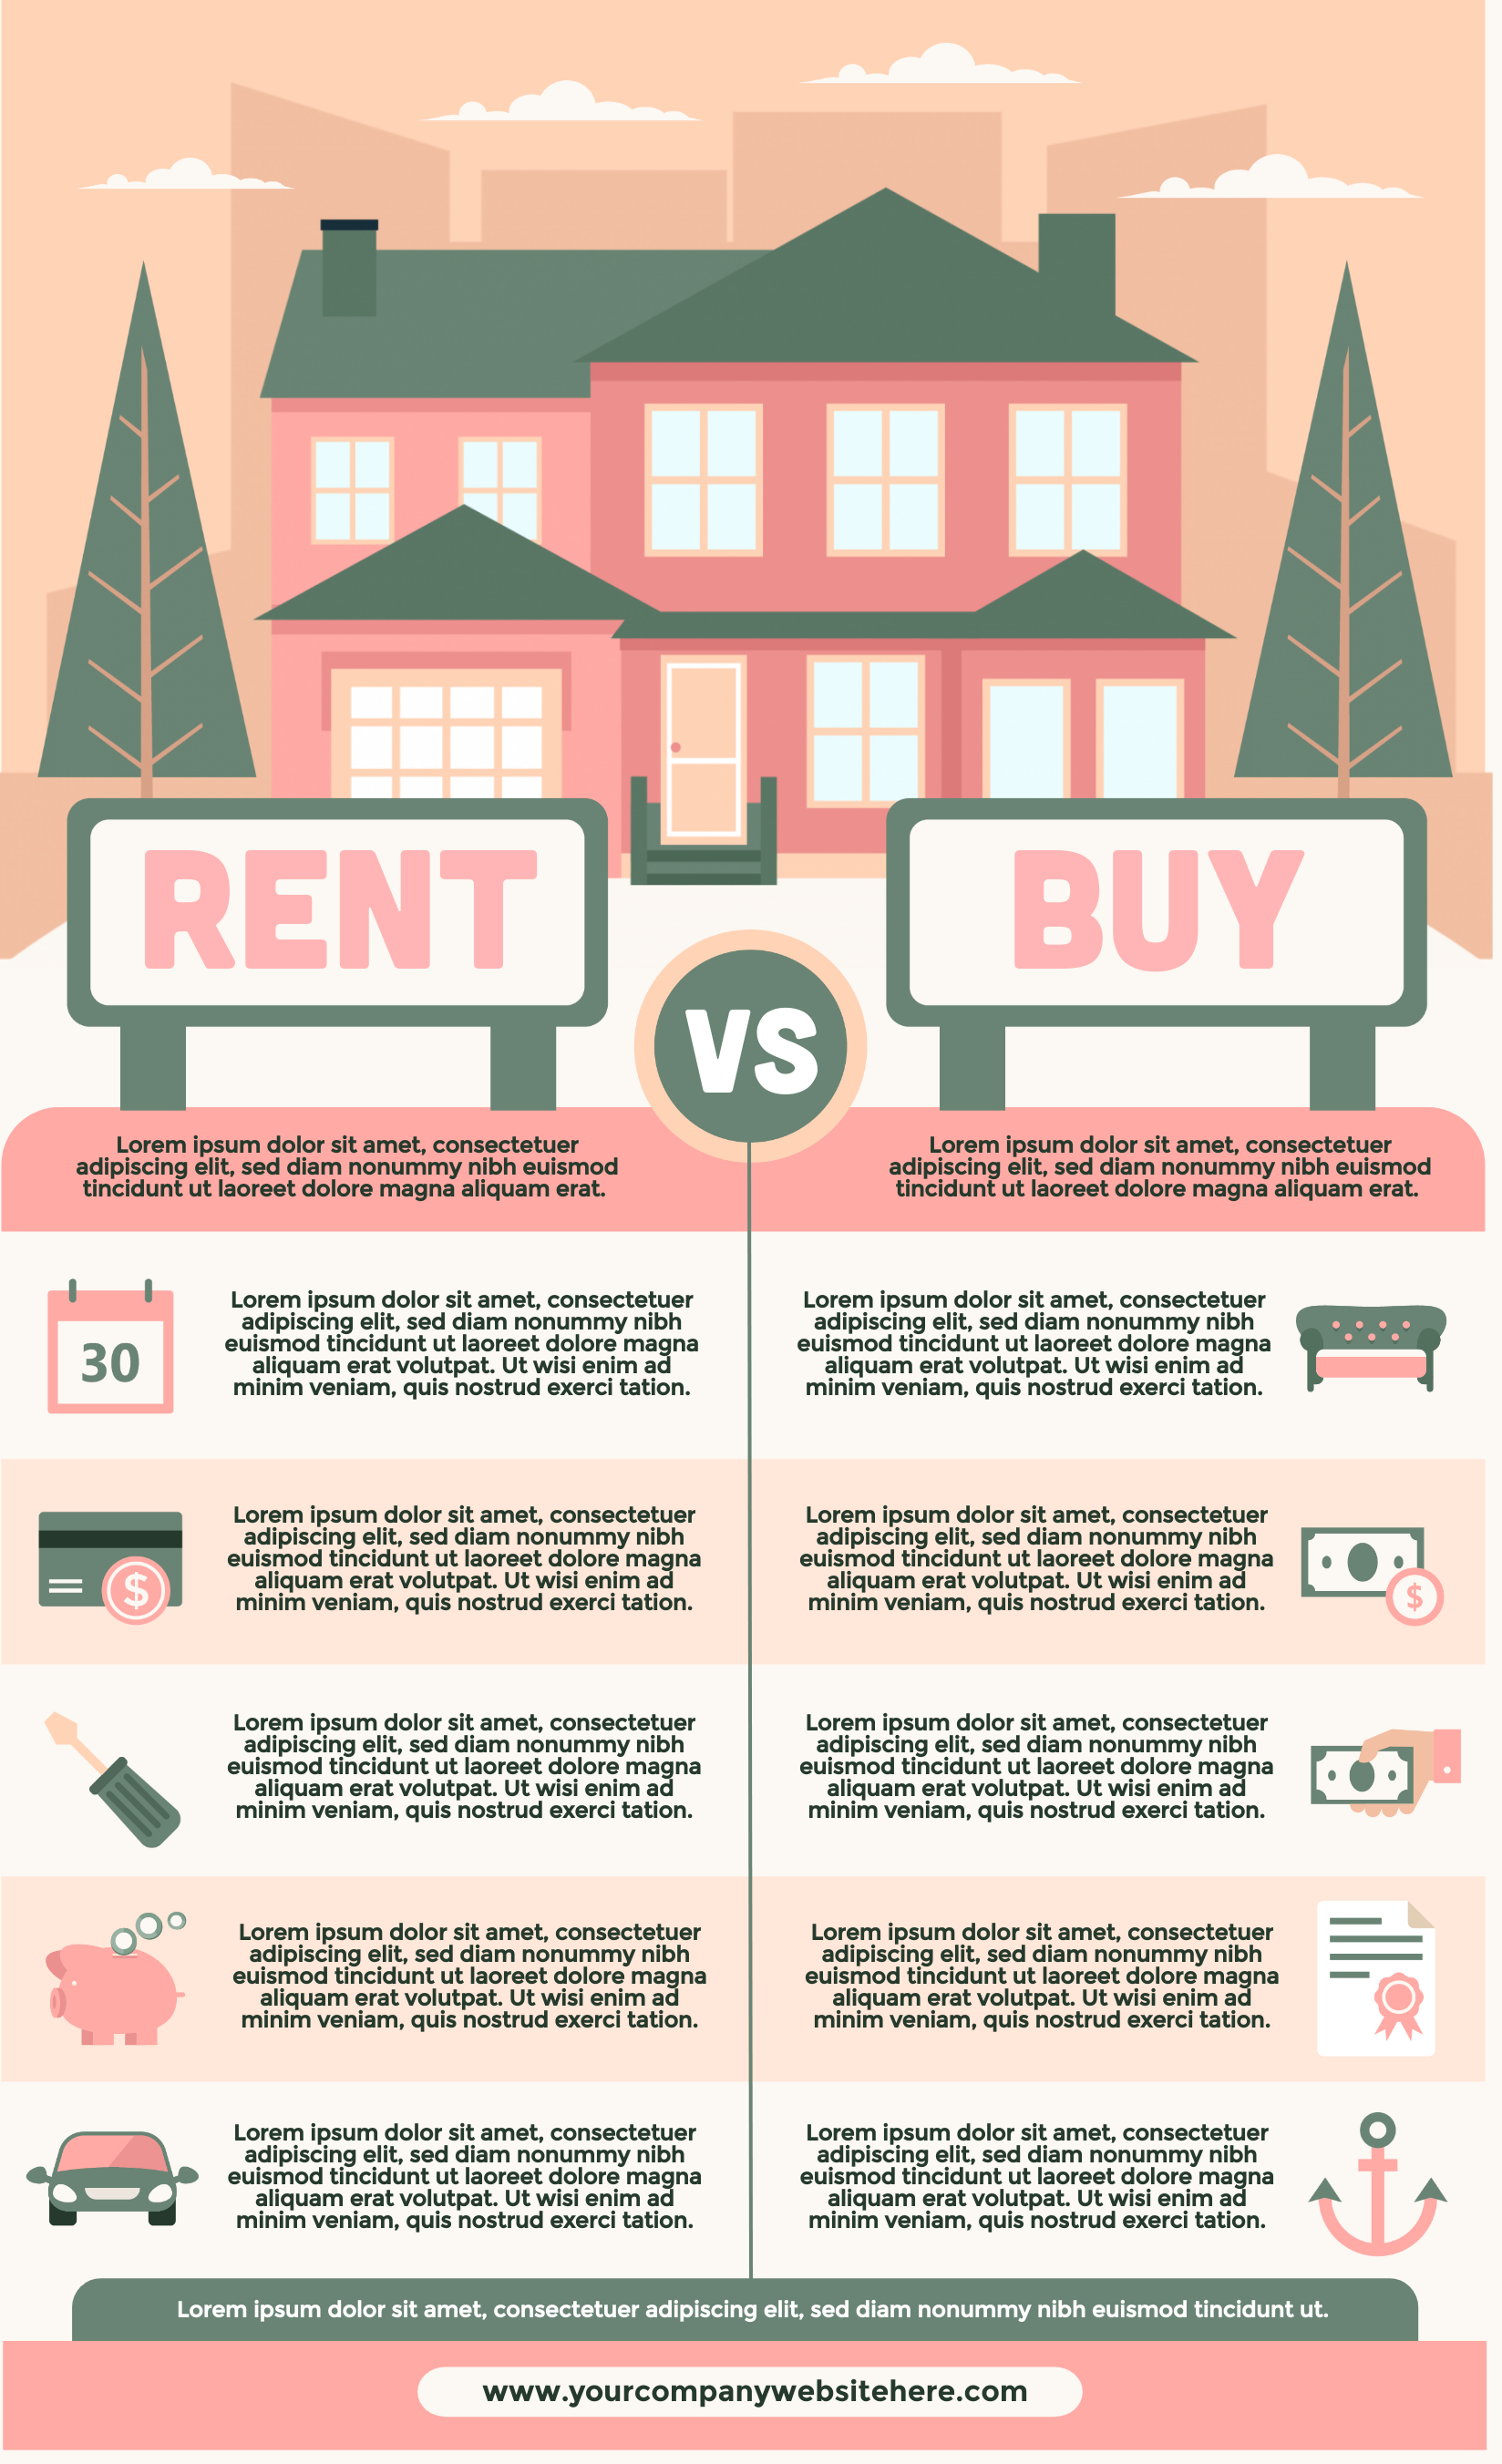 Rent vs buy infographic